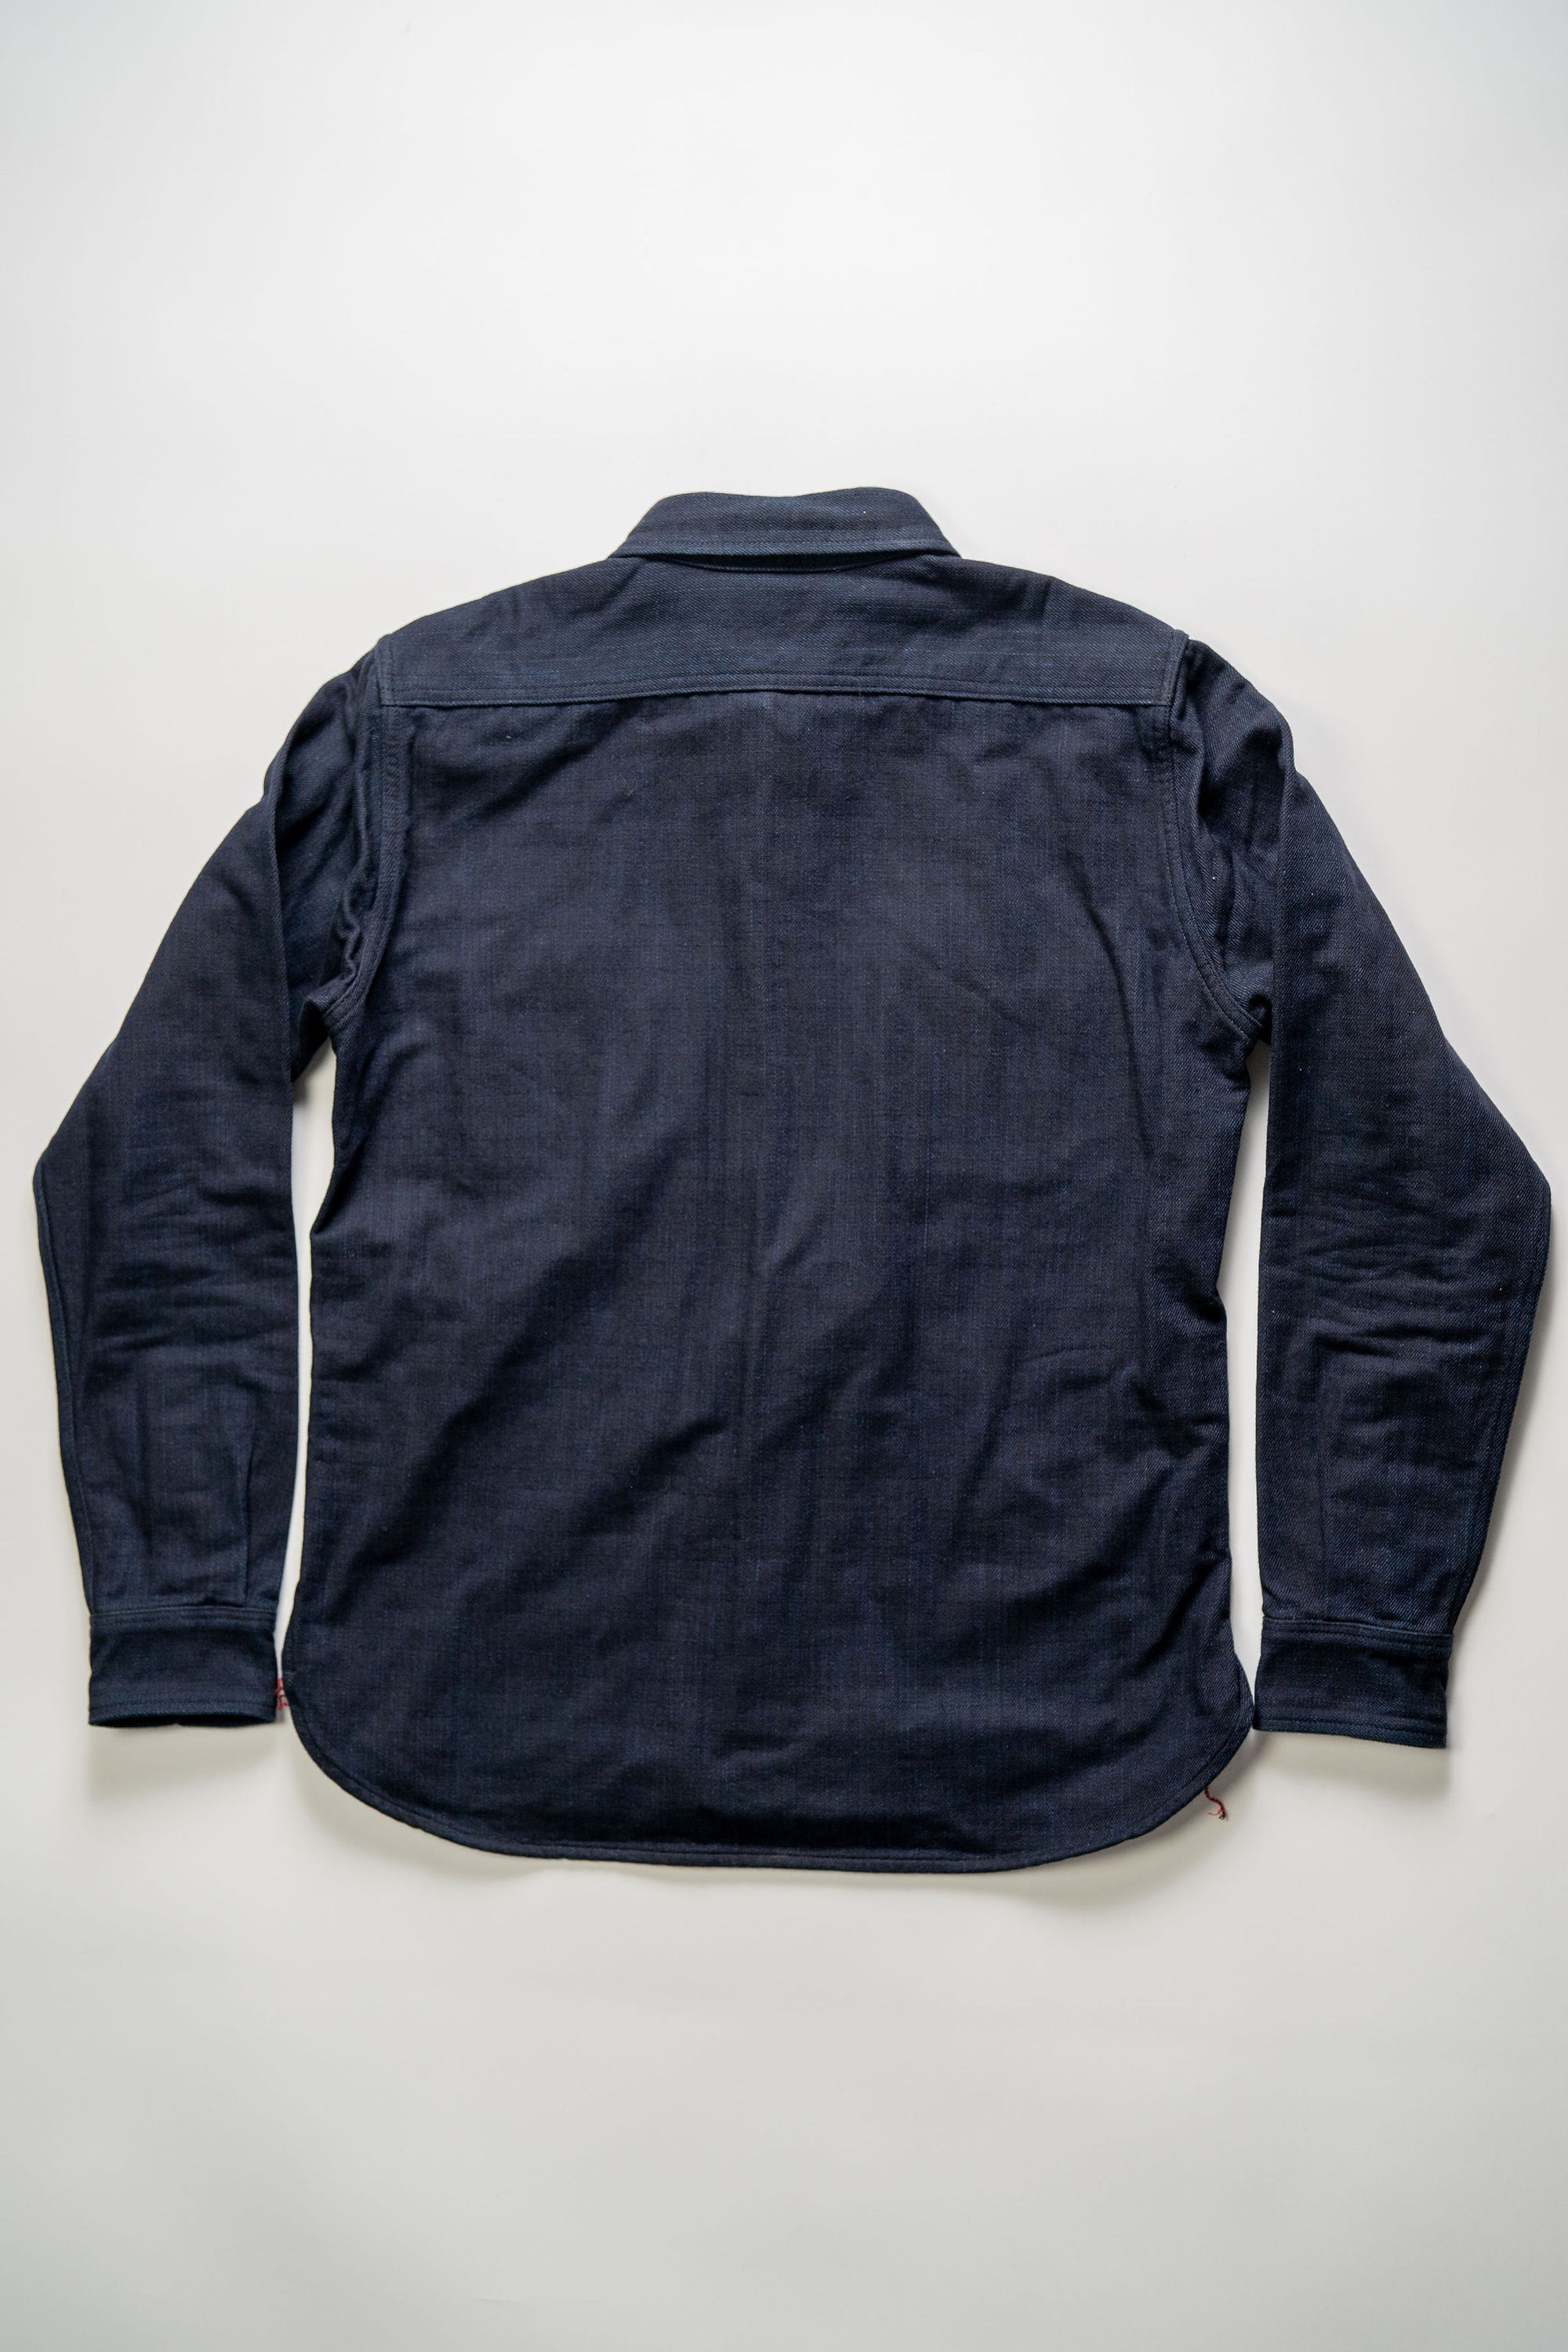 Iron Heart IHSH-374-IND 14oz Double Cloth Work Shirt - Indigo